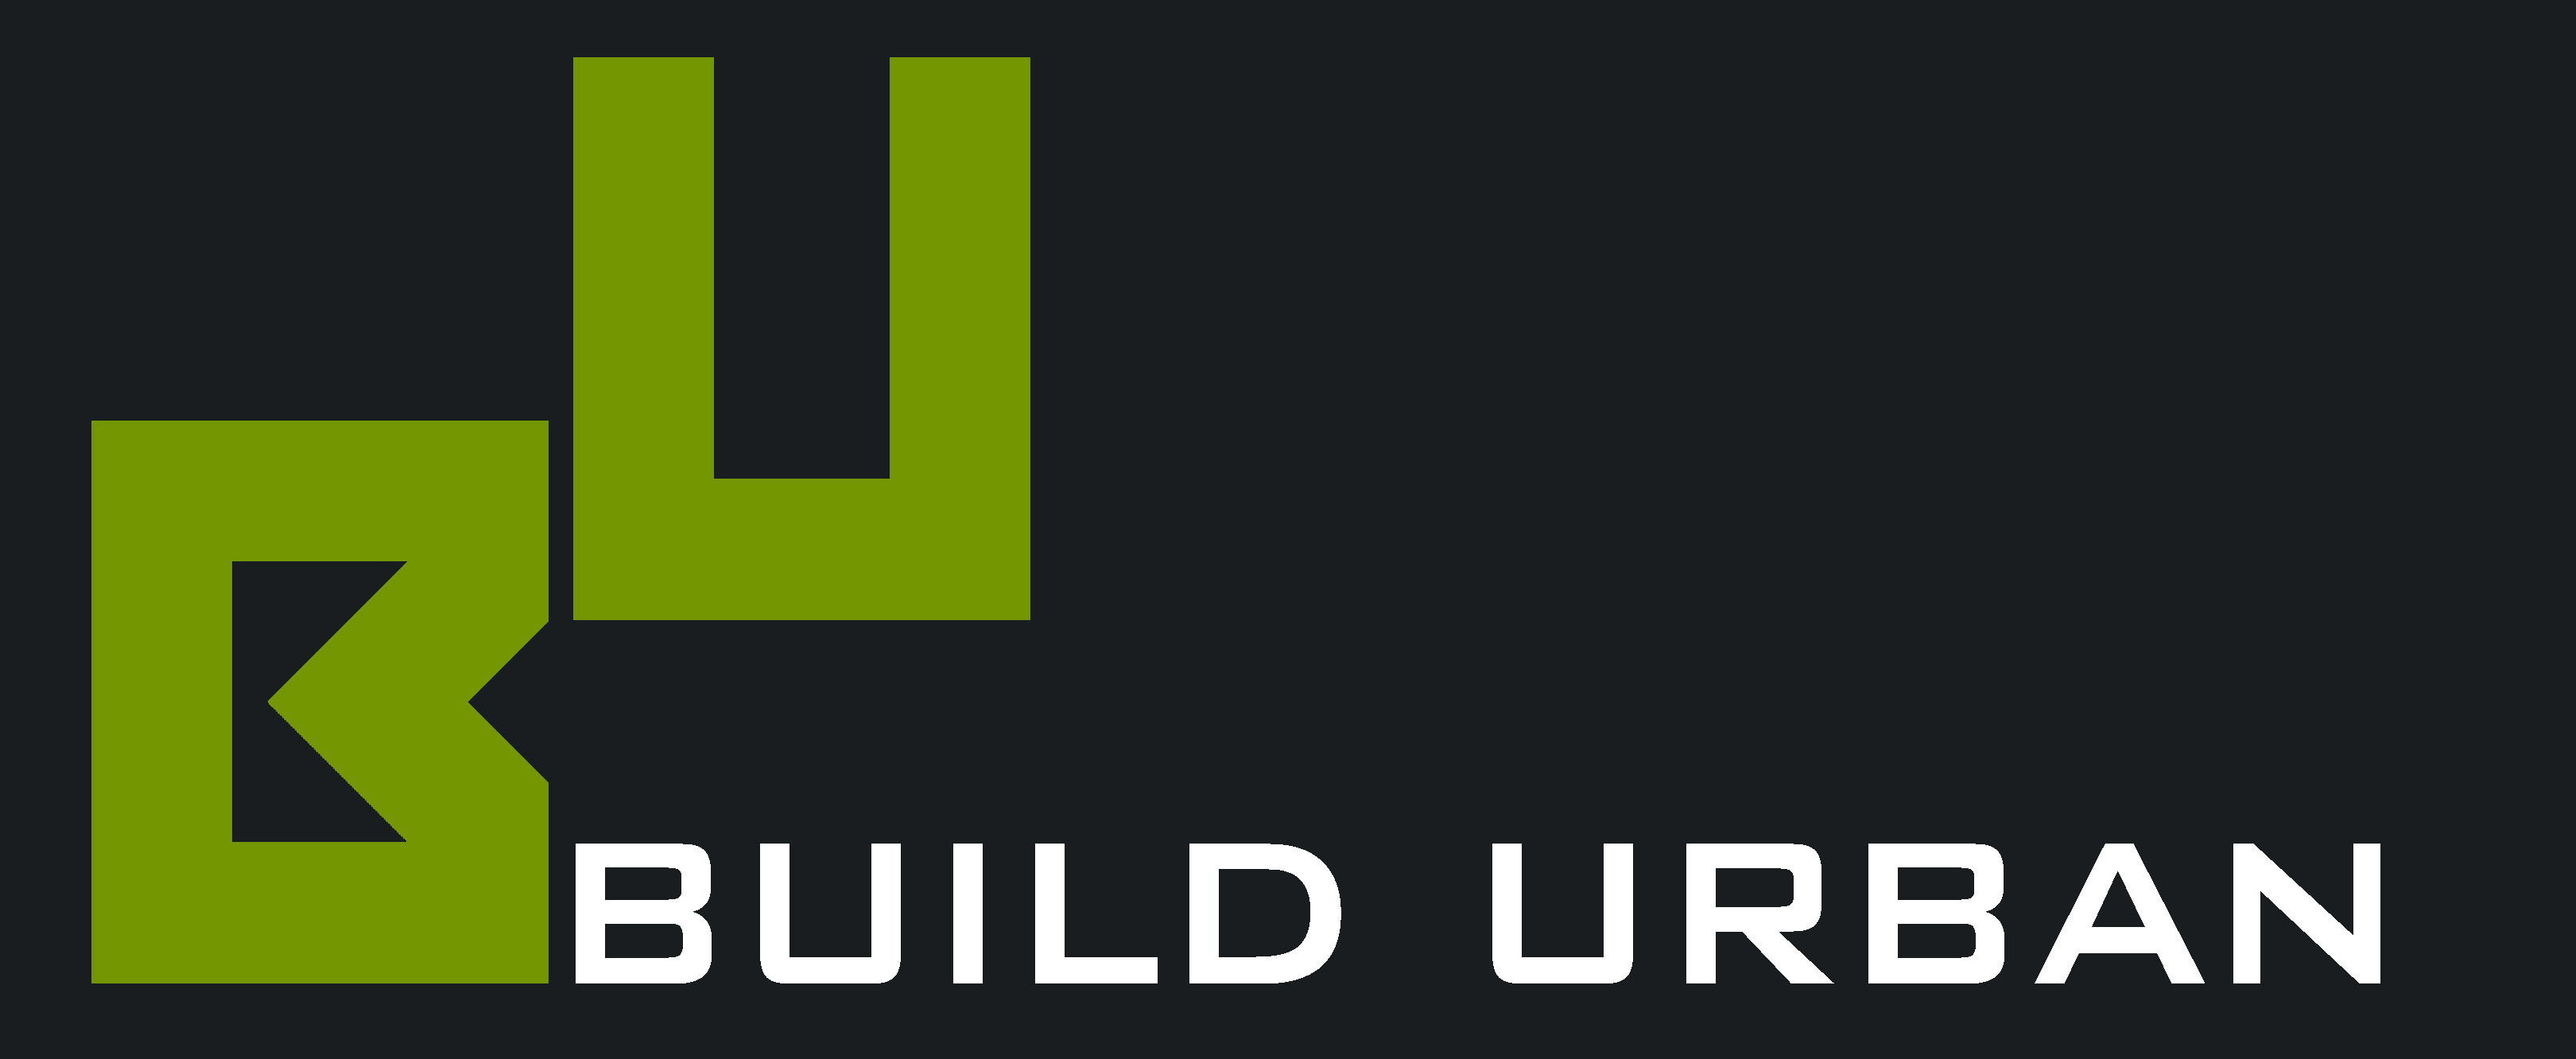 Build Urban LLC company logo